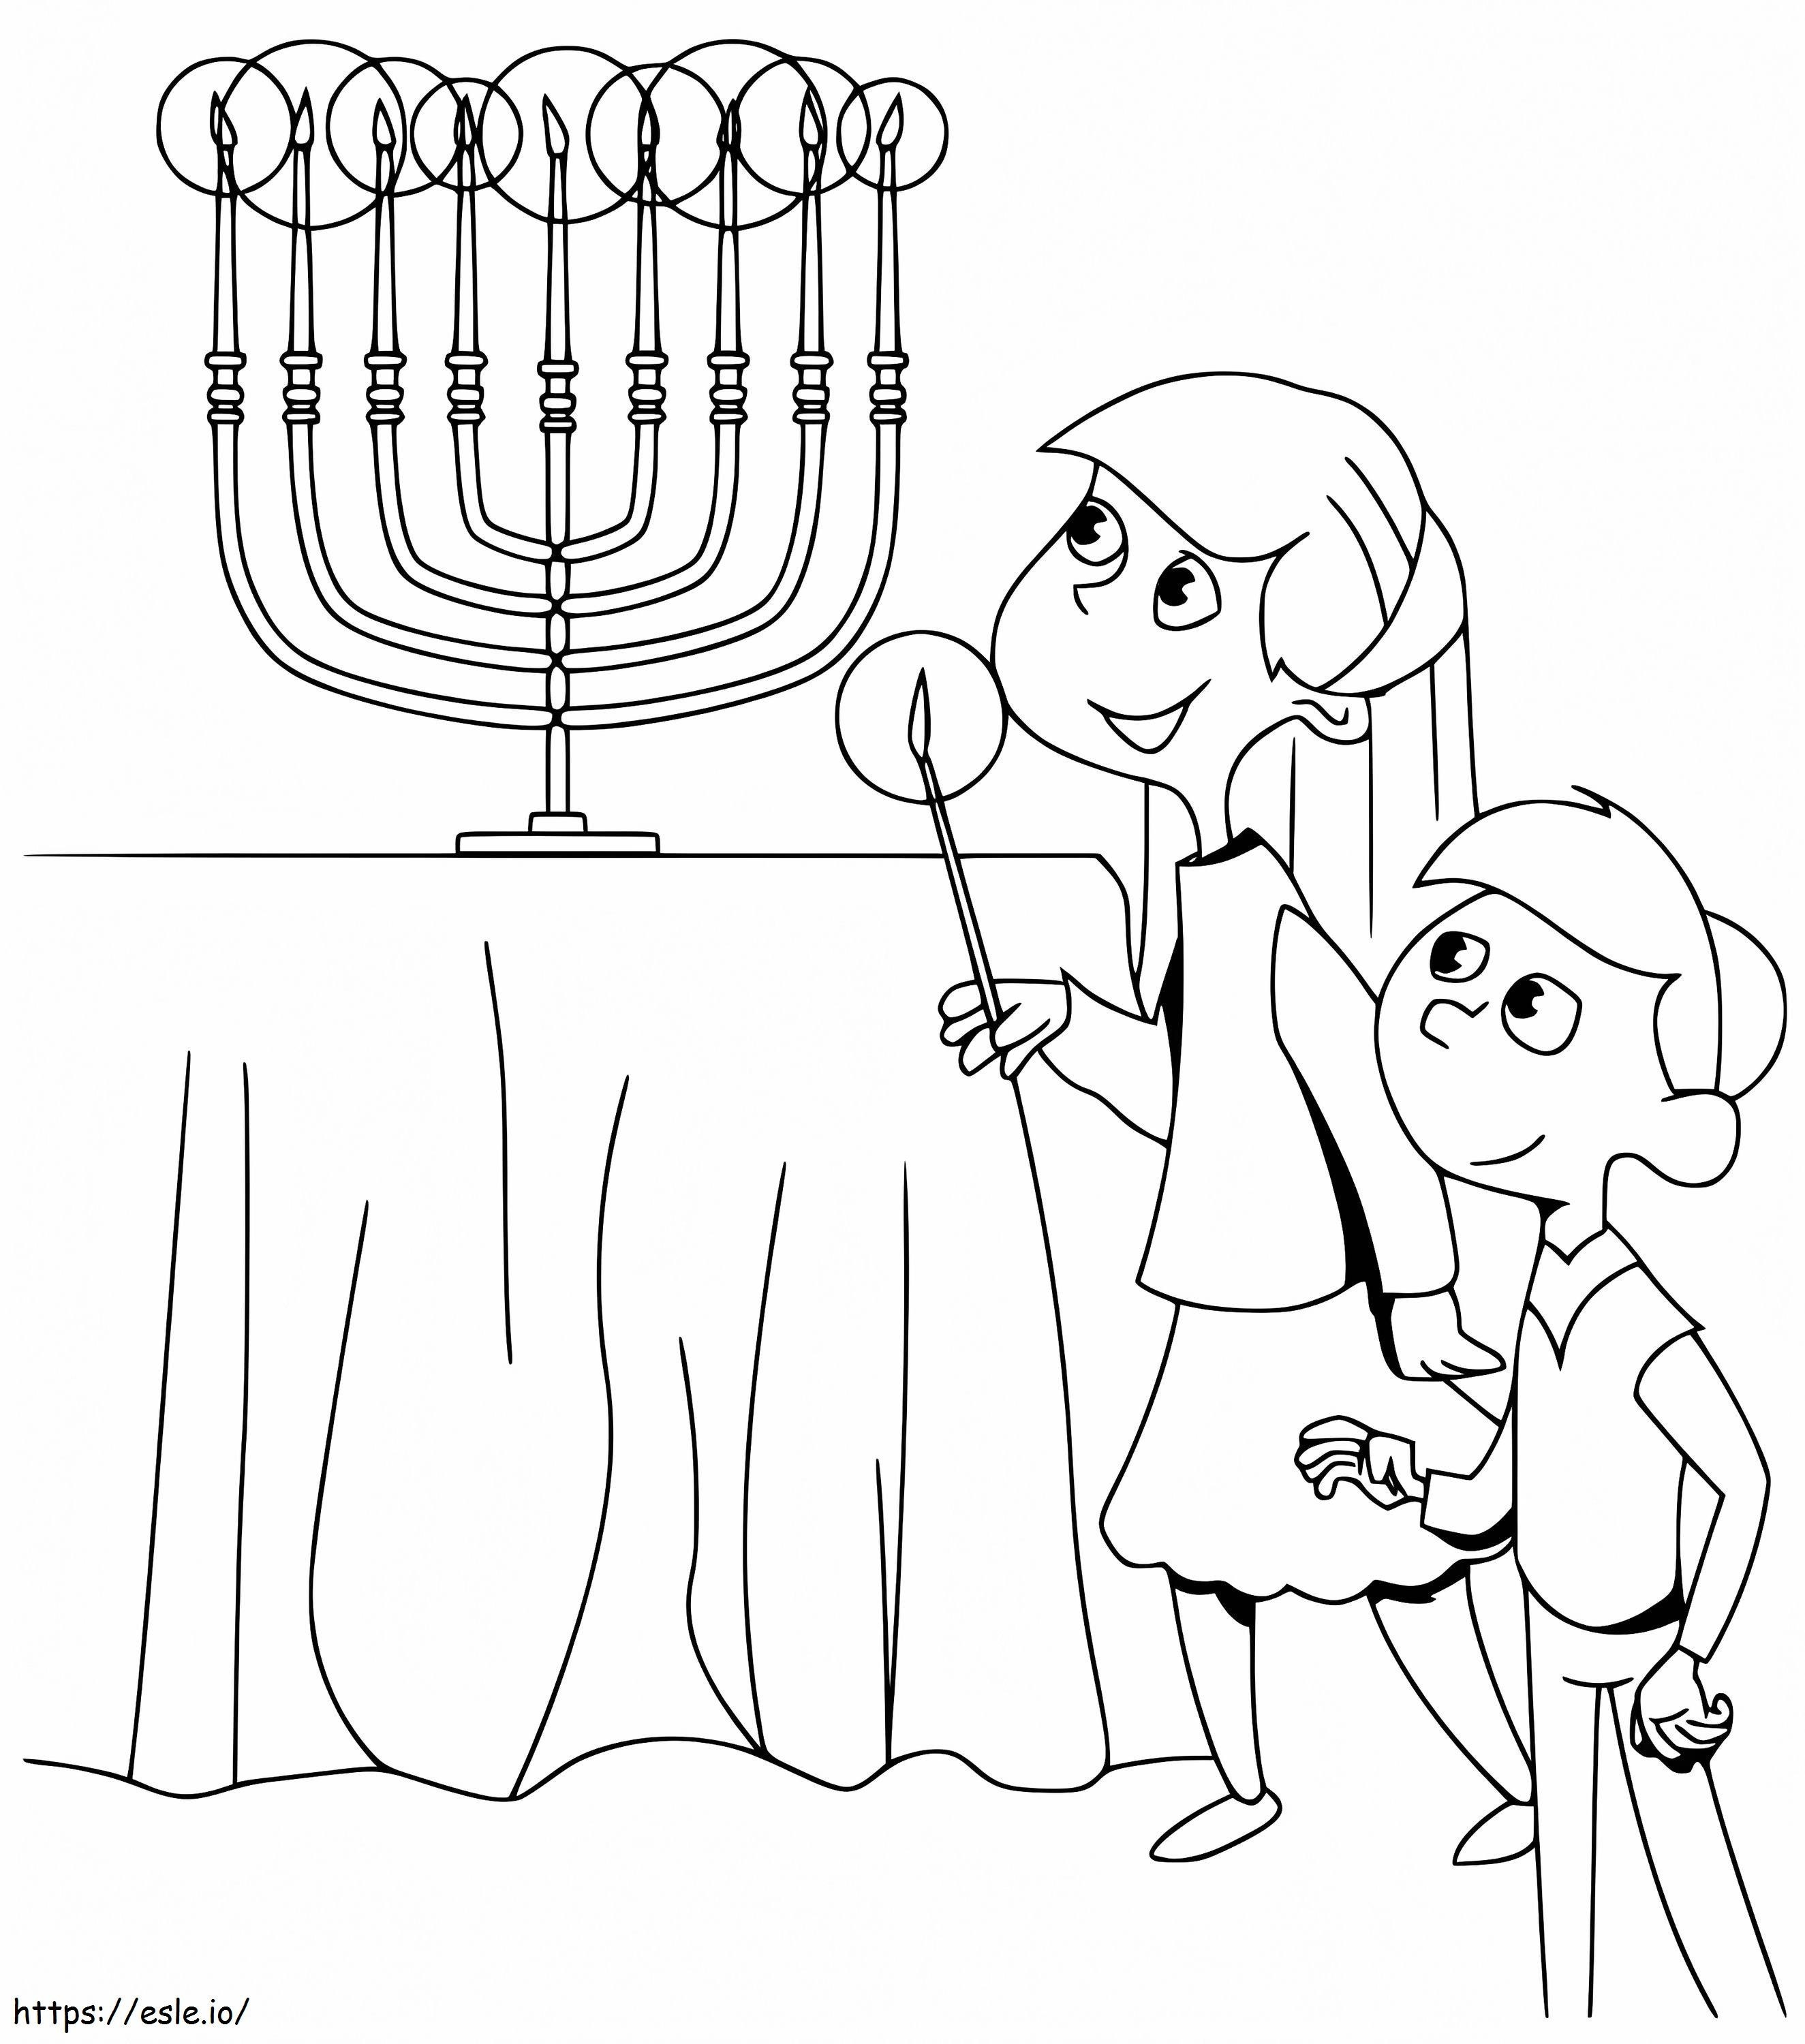 Hanukkah To Print coloring page